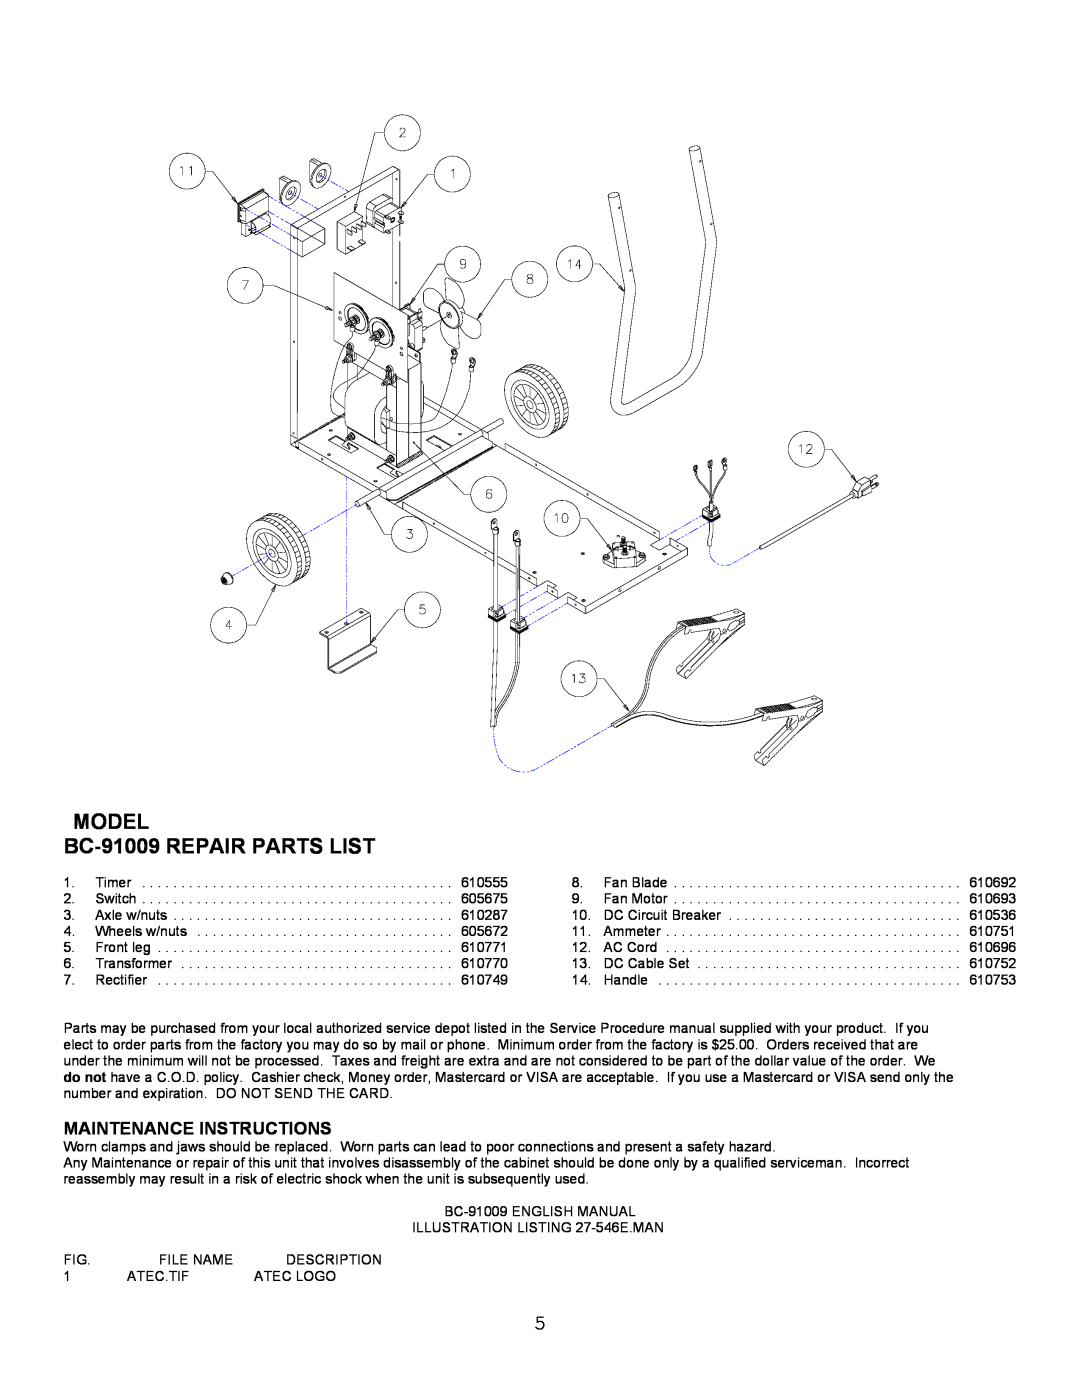 Atec manual Maintenance Instructions, MODEL BC-91009 REPAIR PARTS LIST 